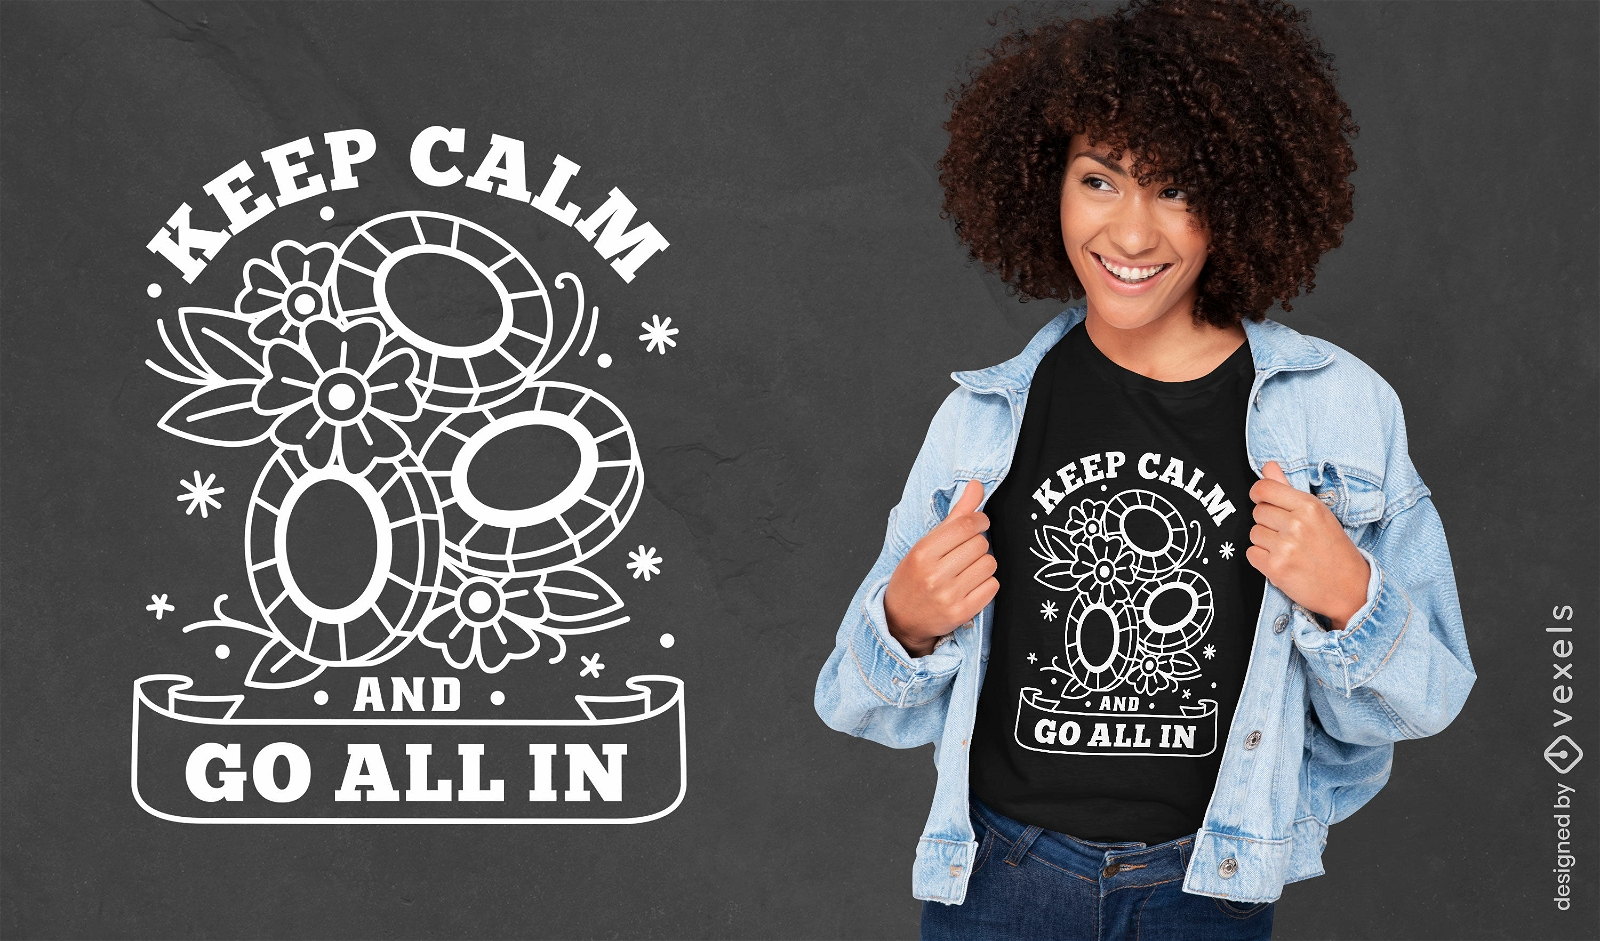 Keep calm poker mantra t-shirt design